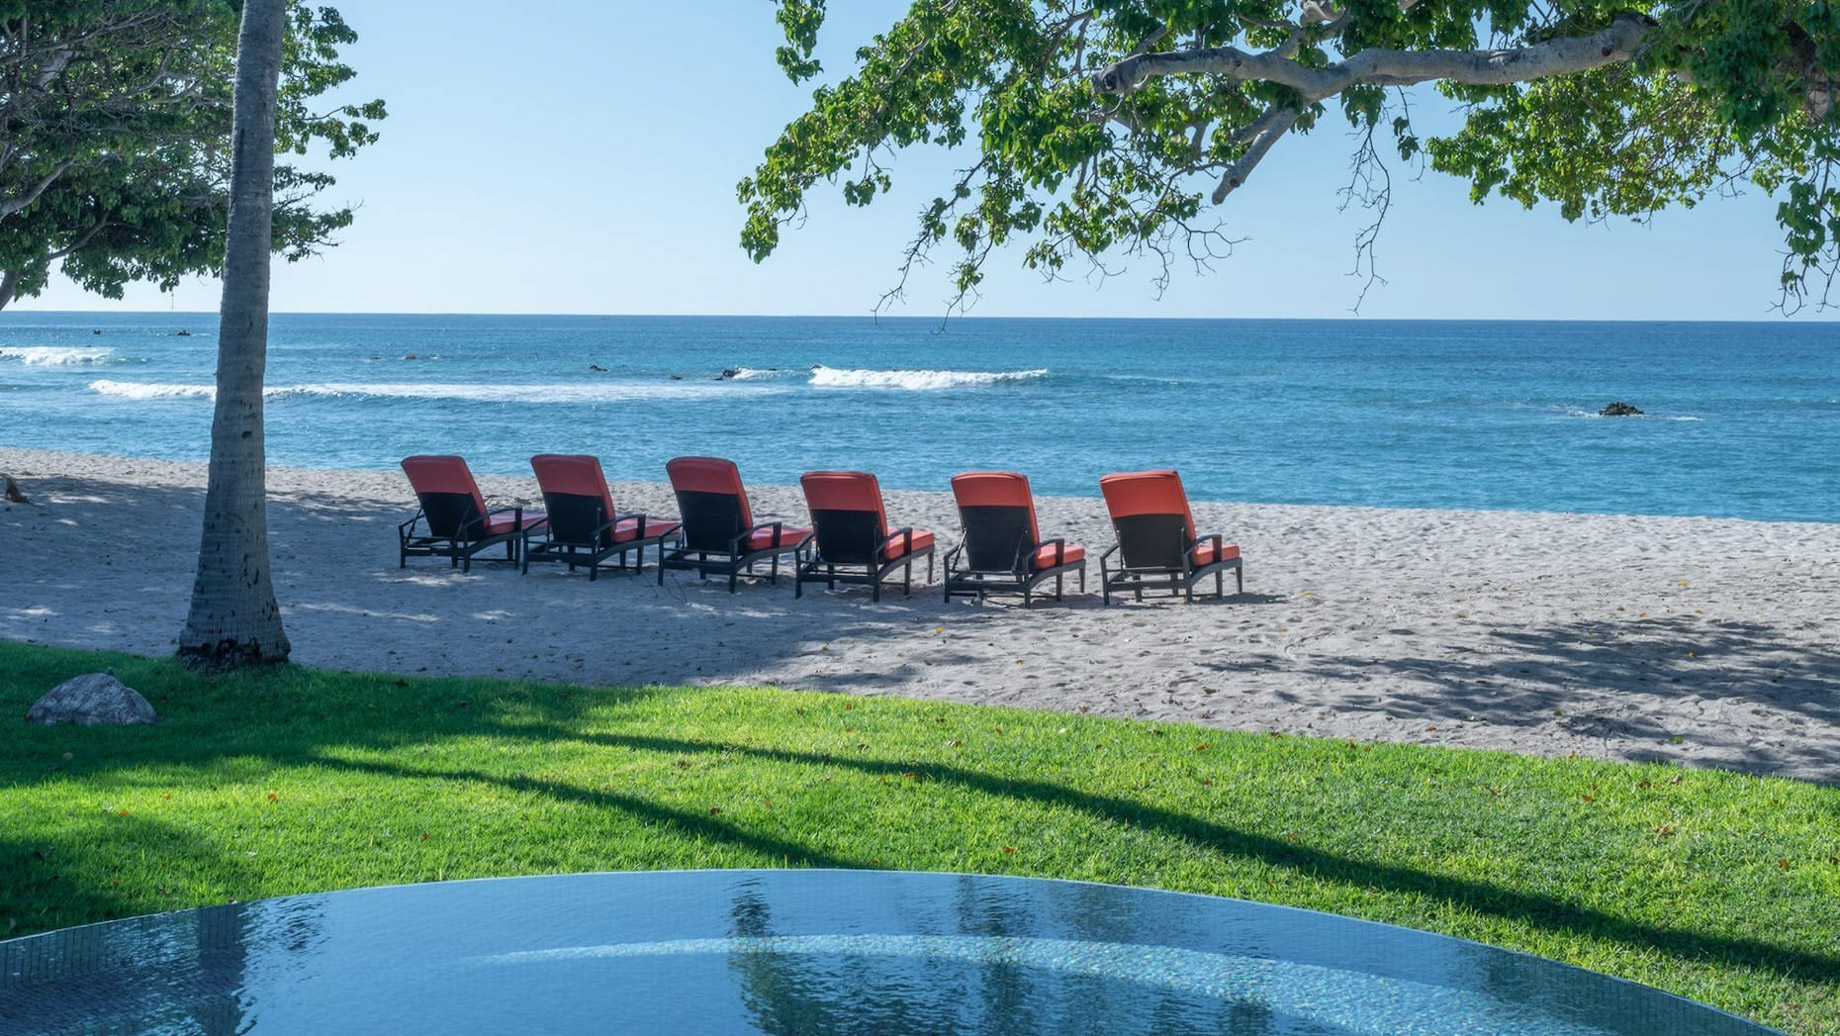 Four Seasons Resort Punta Mita – Nayarit, Mexico – Arena Beach House Beach Chair View